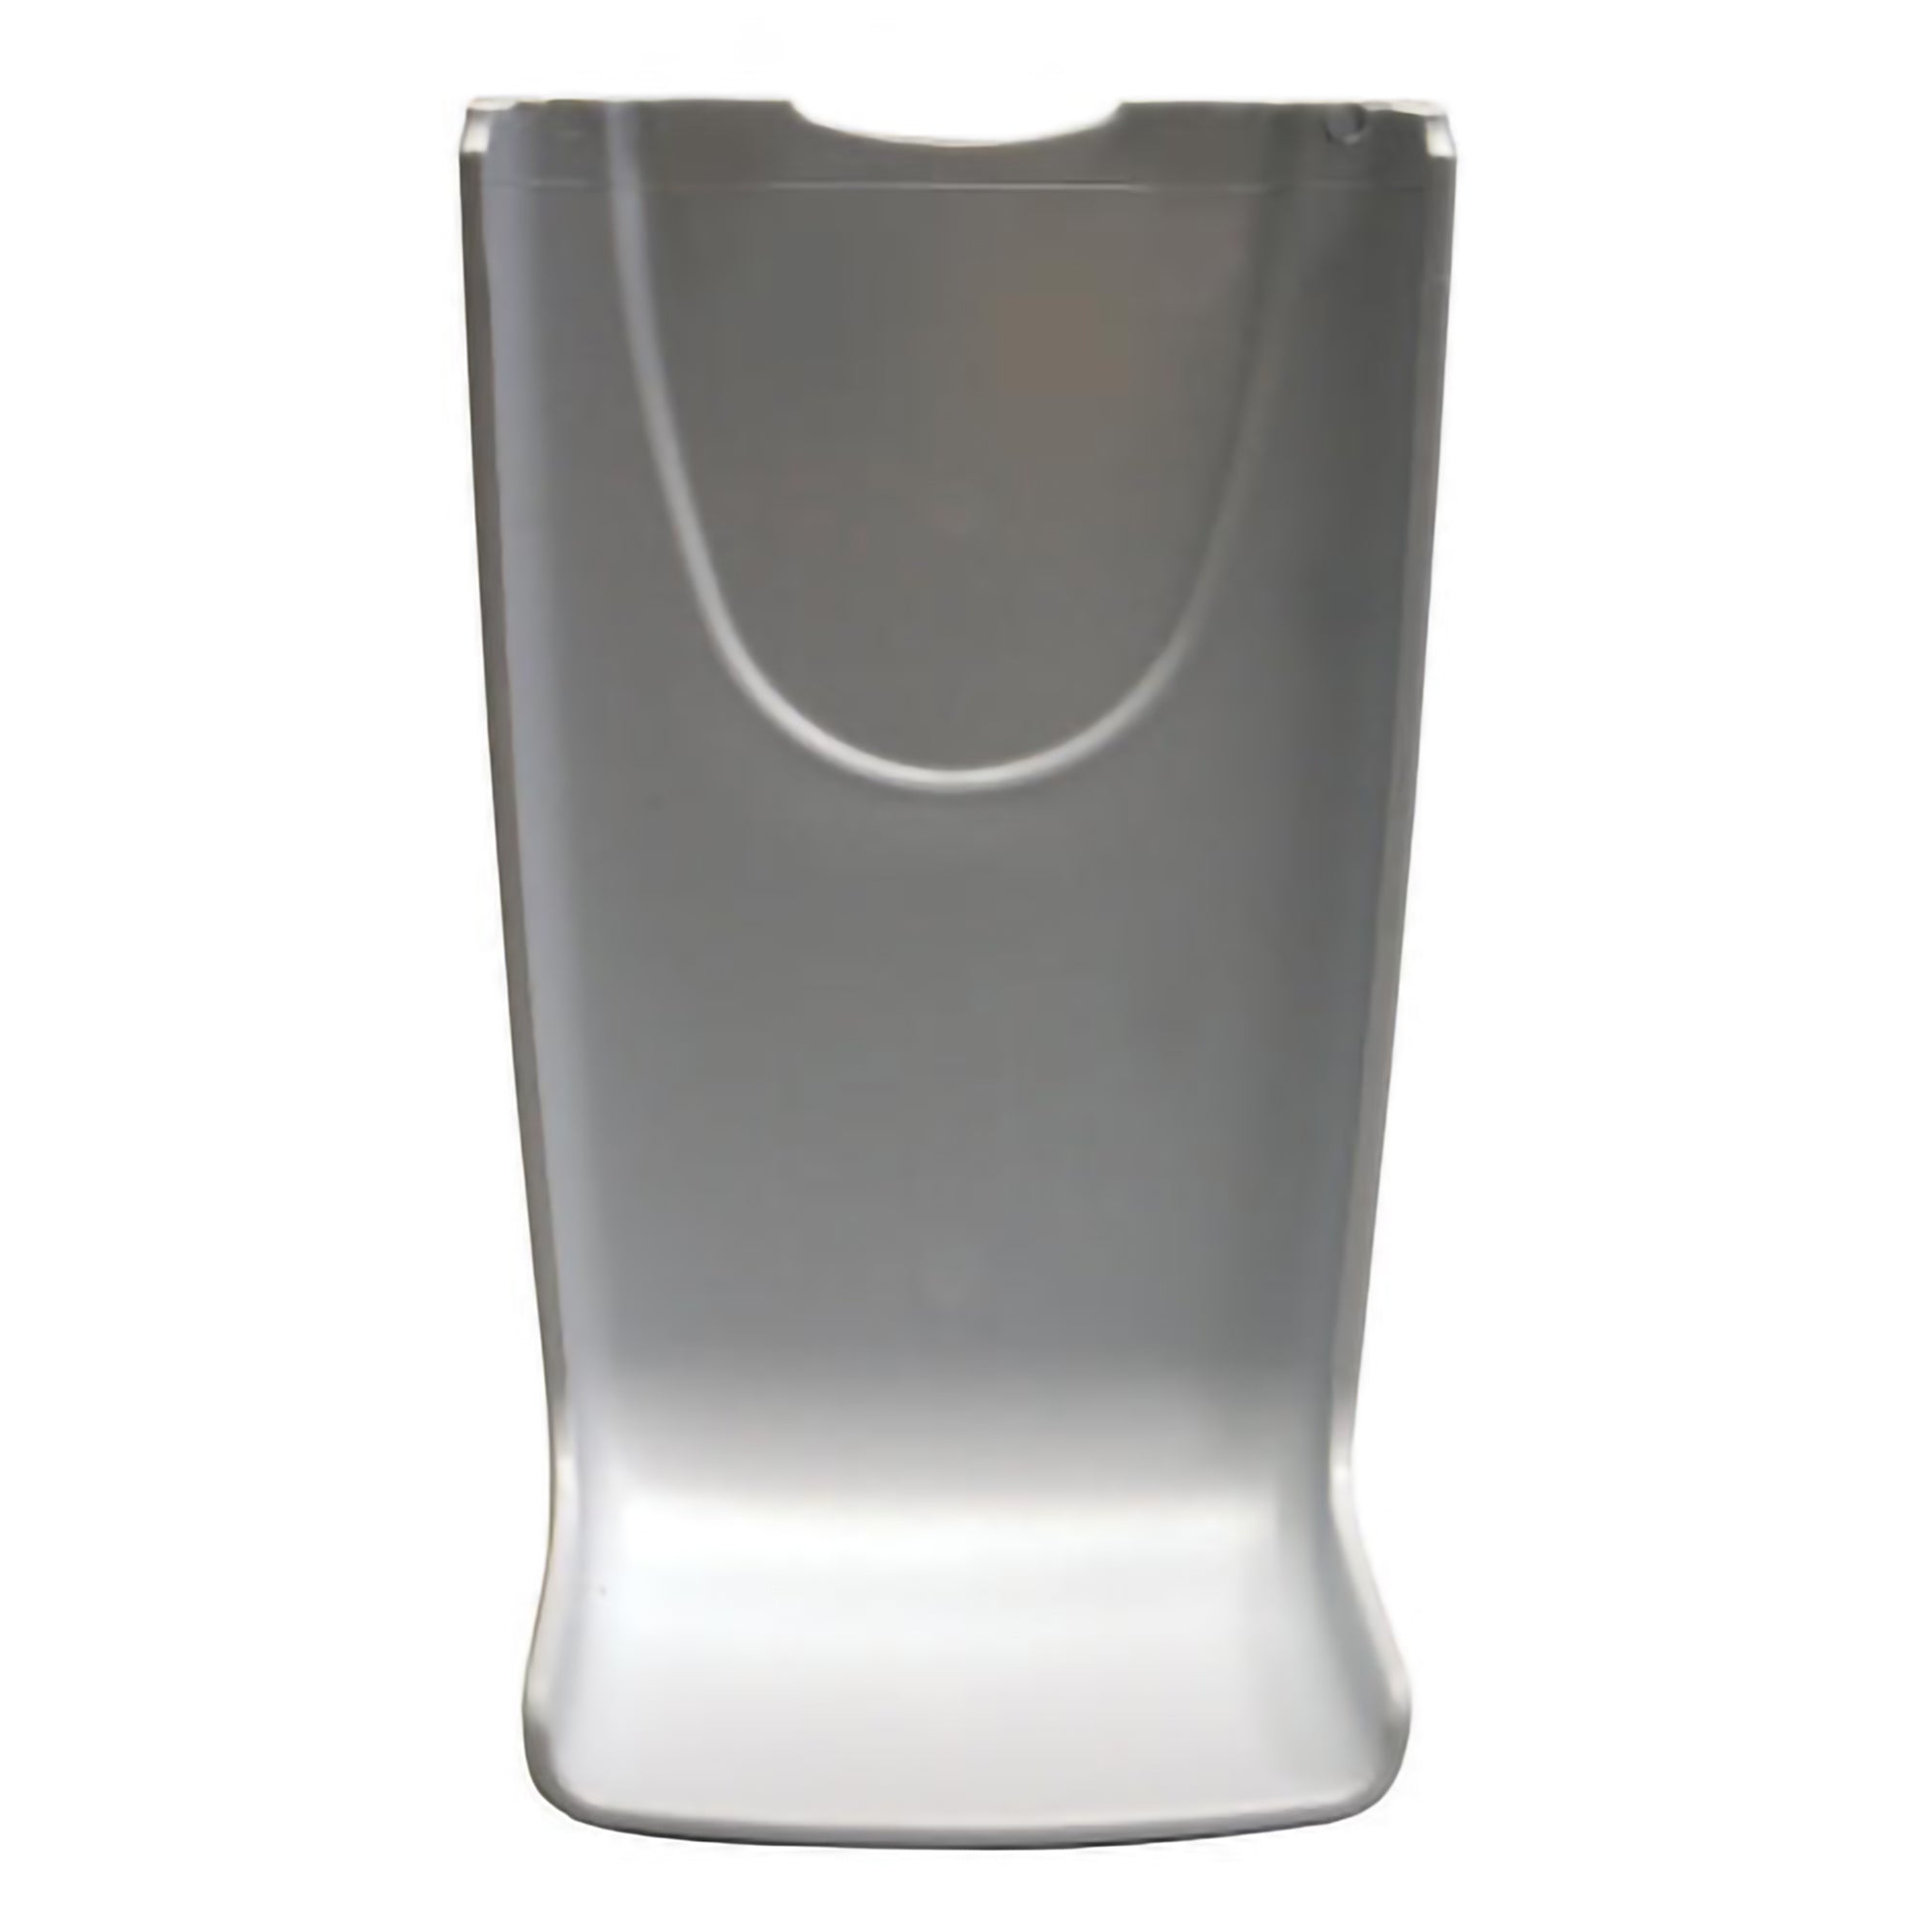 Dispenser Drip Tray SC Johnson White, Plastic, 3-1/2 X 4 X 6-1/2 Inch (TRYMAN2)